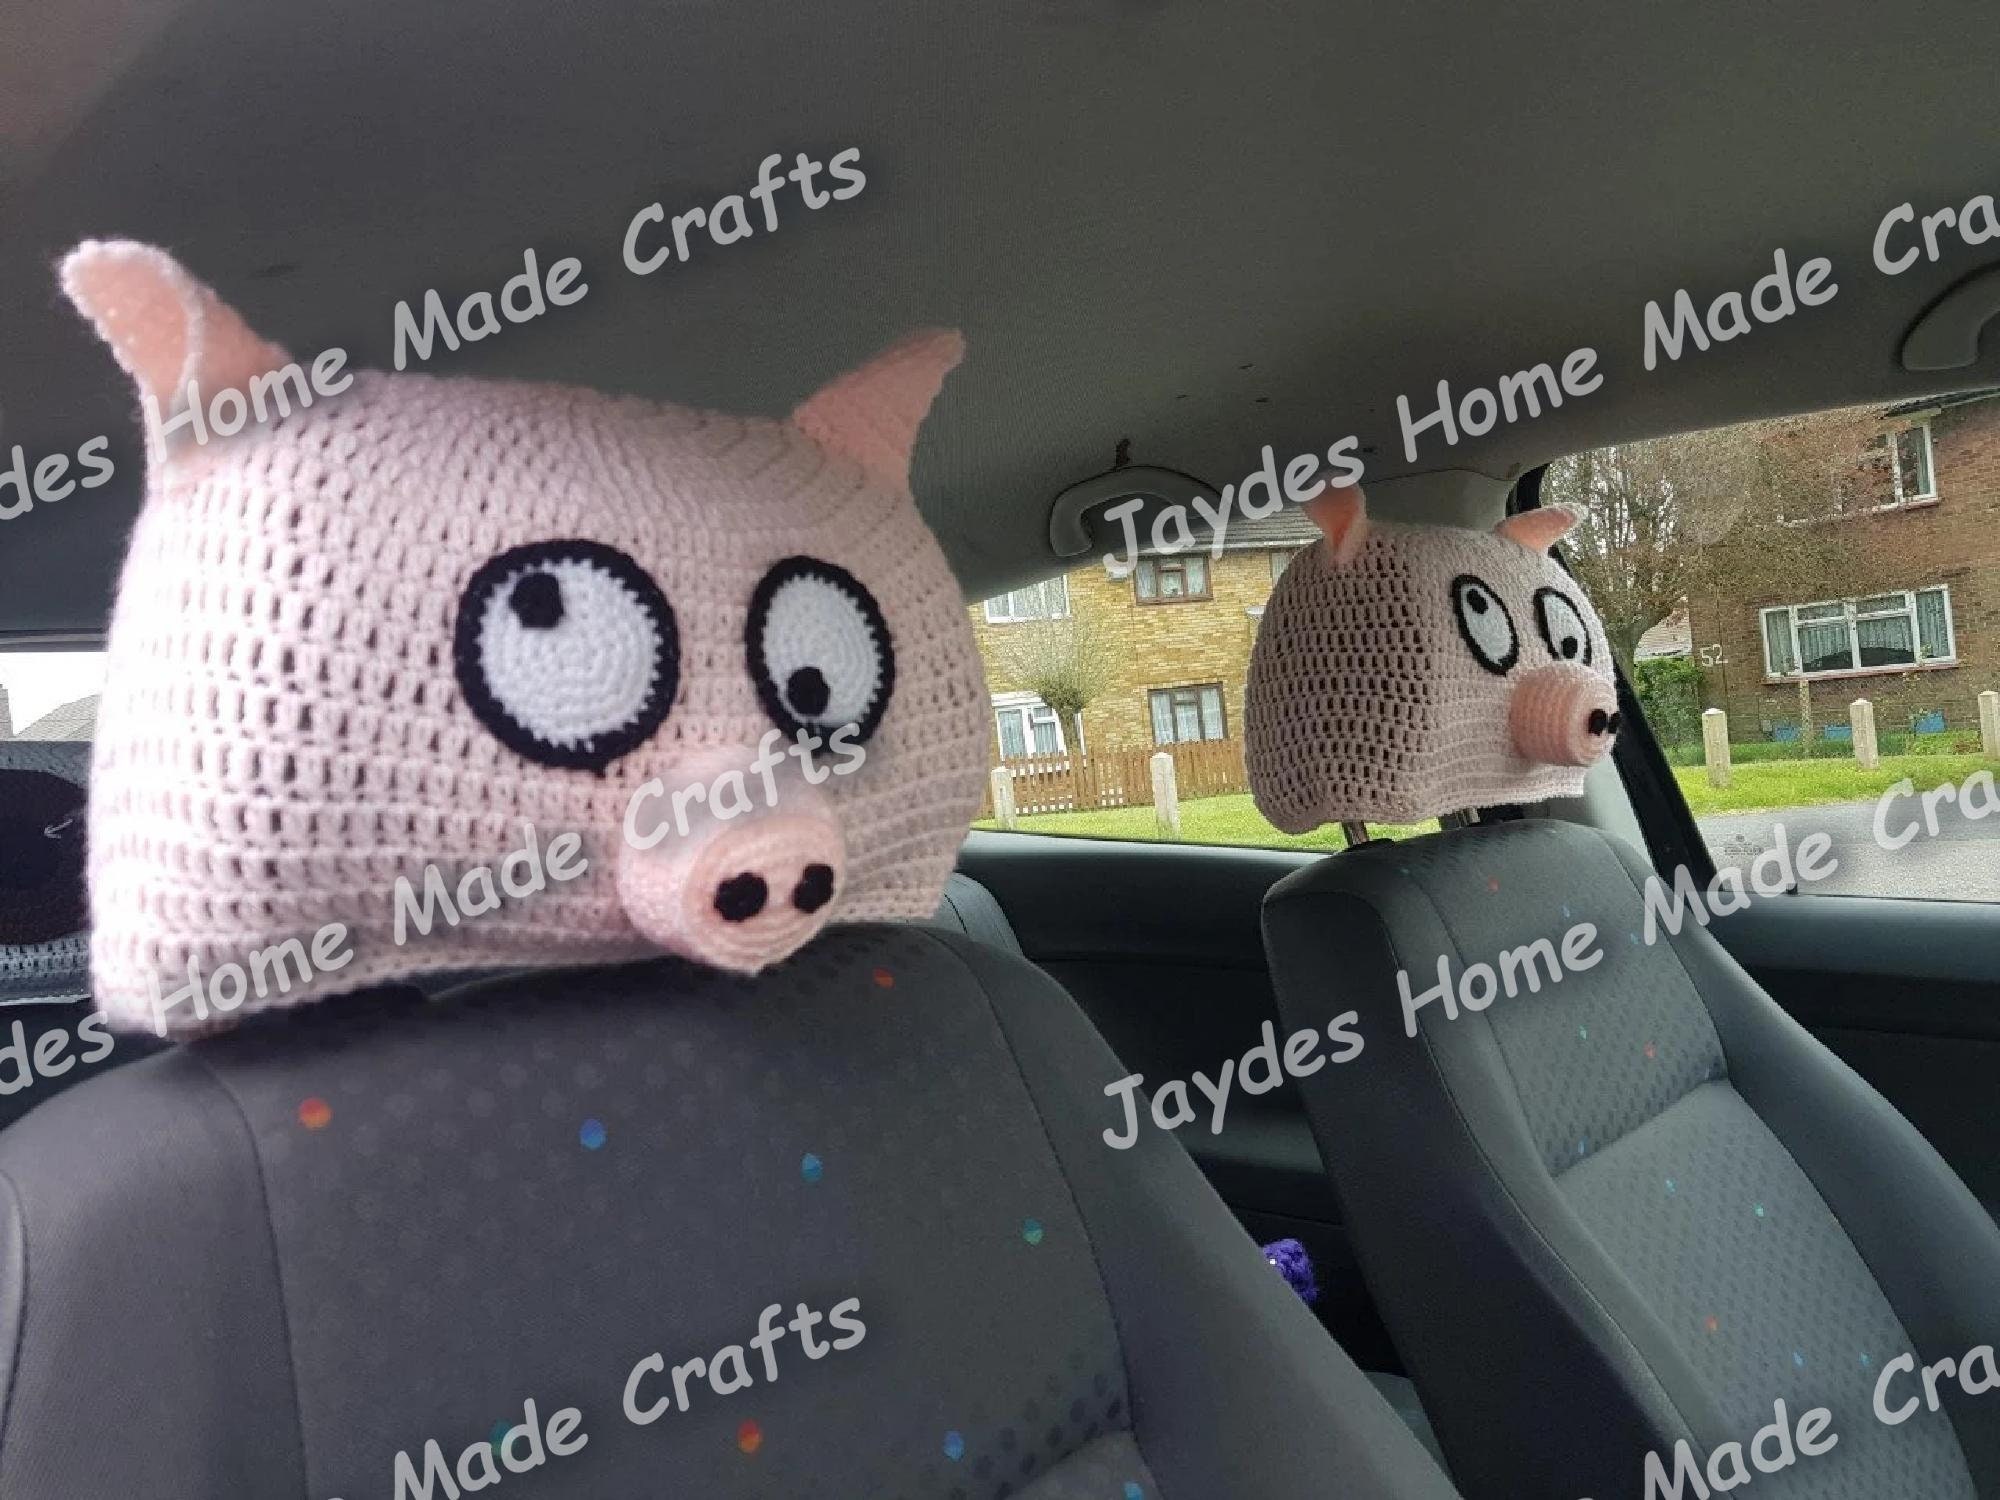 Pig seat cover - .de